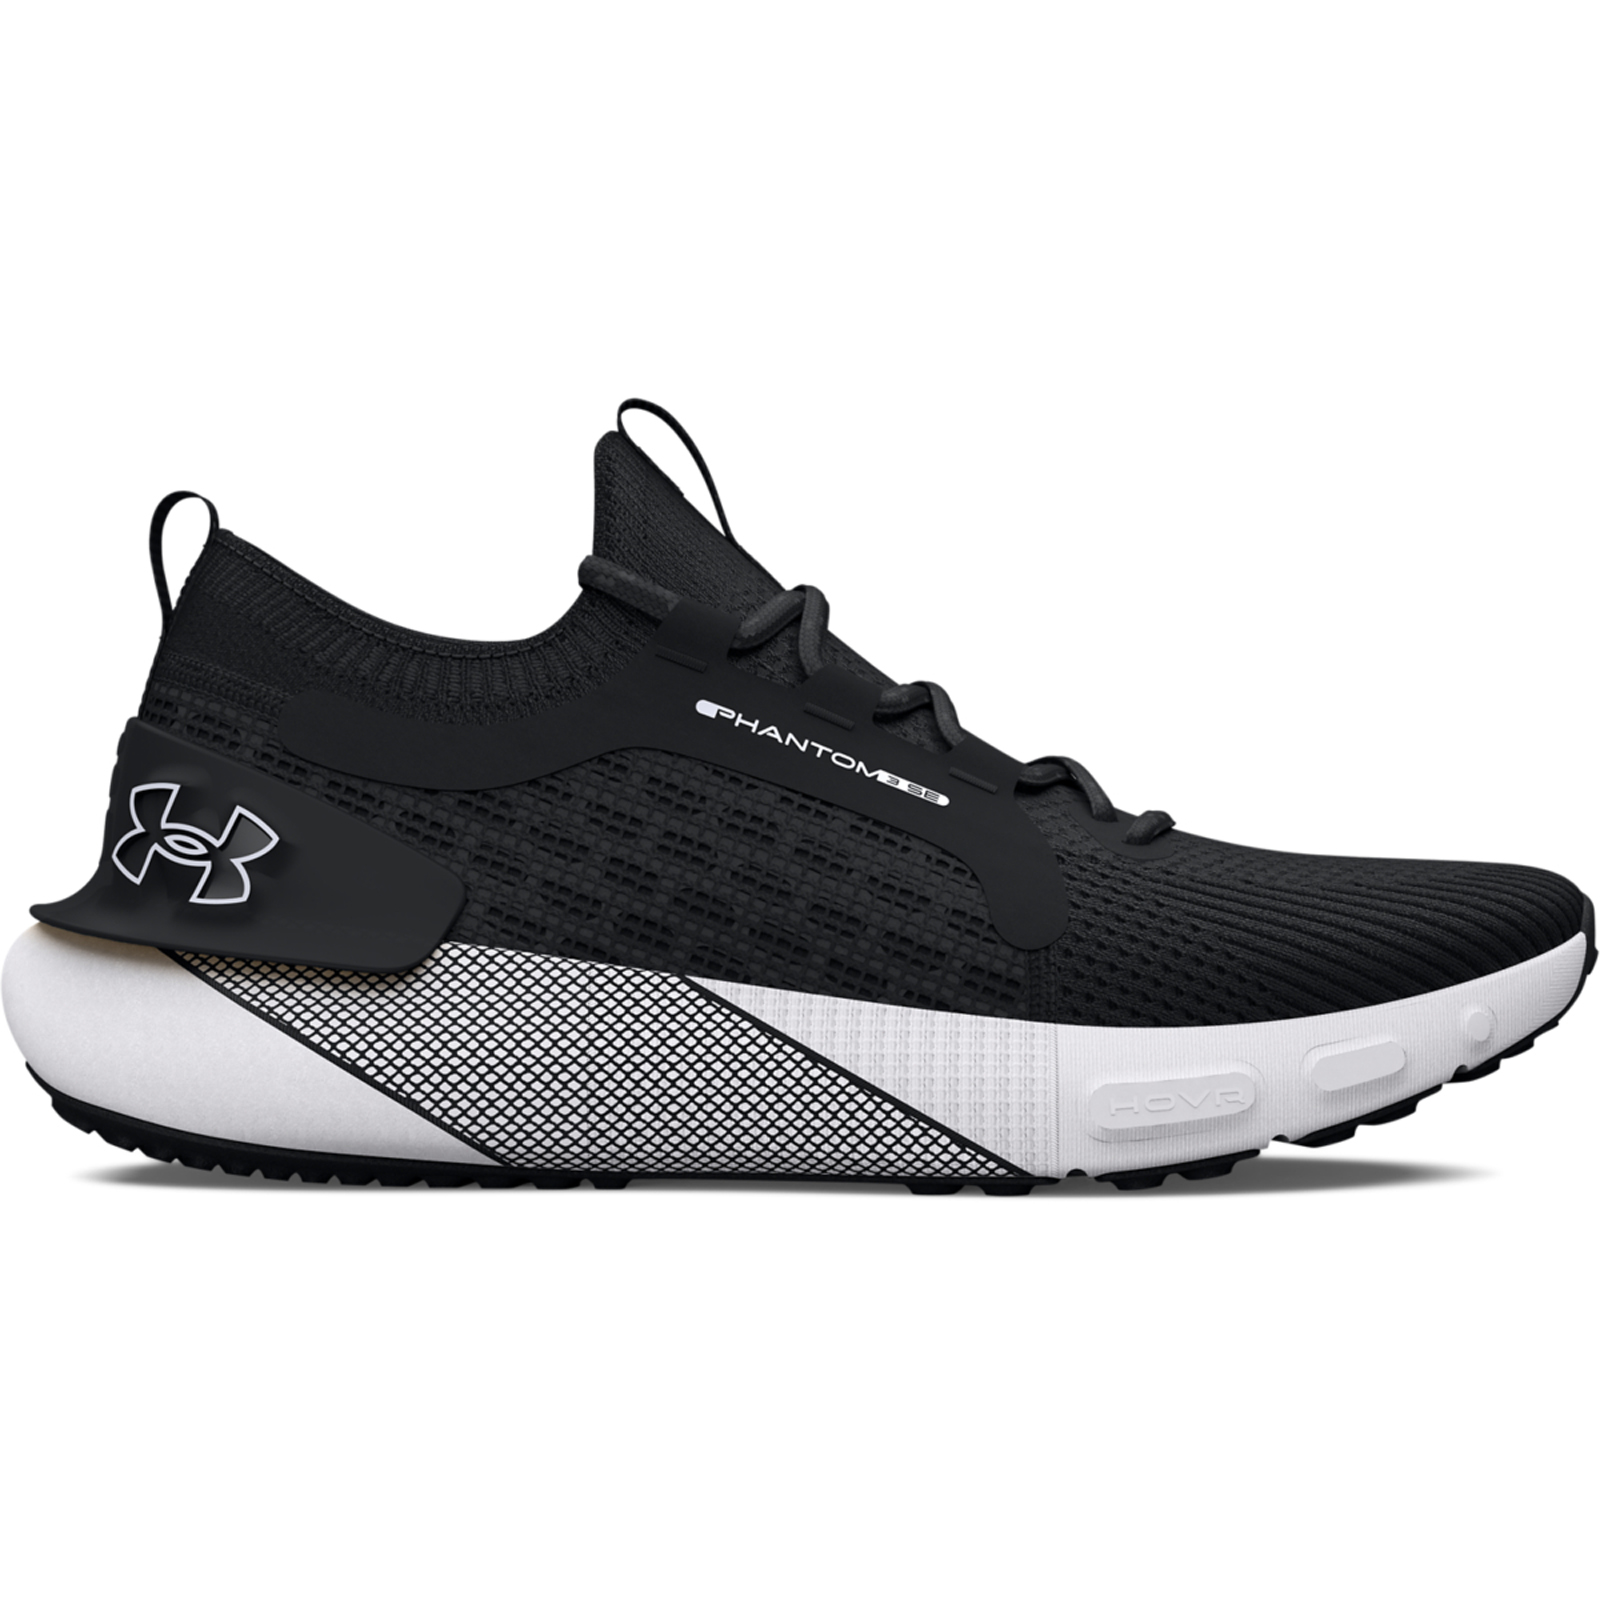 Under Armour - Women's UA HOVR™ Phantom 3 SE Running Shoes - Black/Jet Gray/White Γυναικεία > Παπούτσια > Αθλητικά > Παπούτσι Low Cut